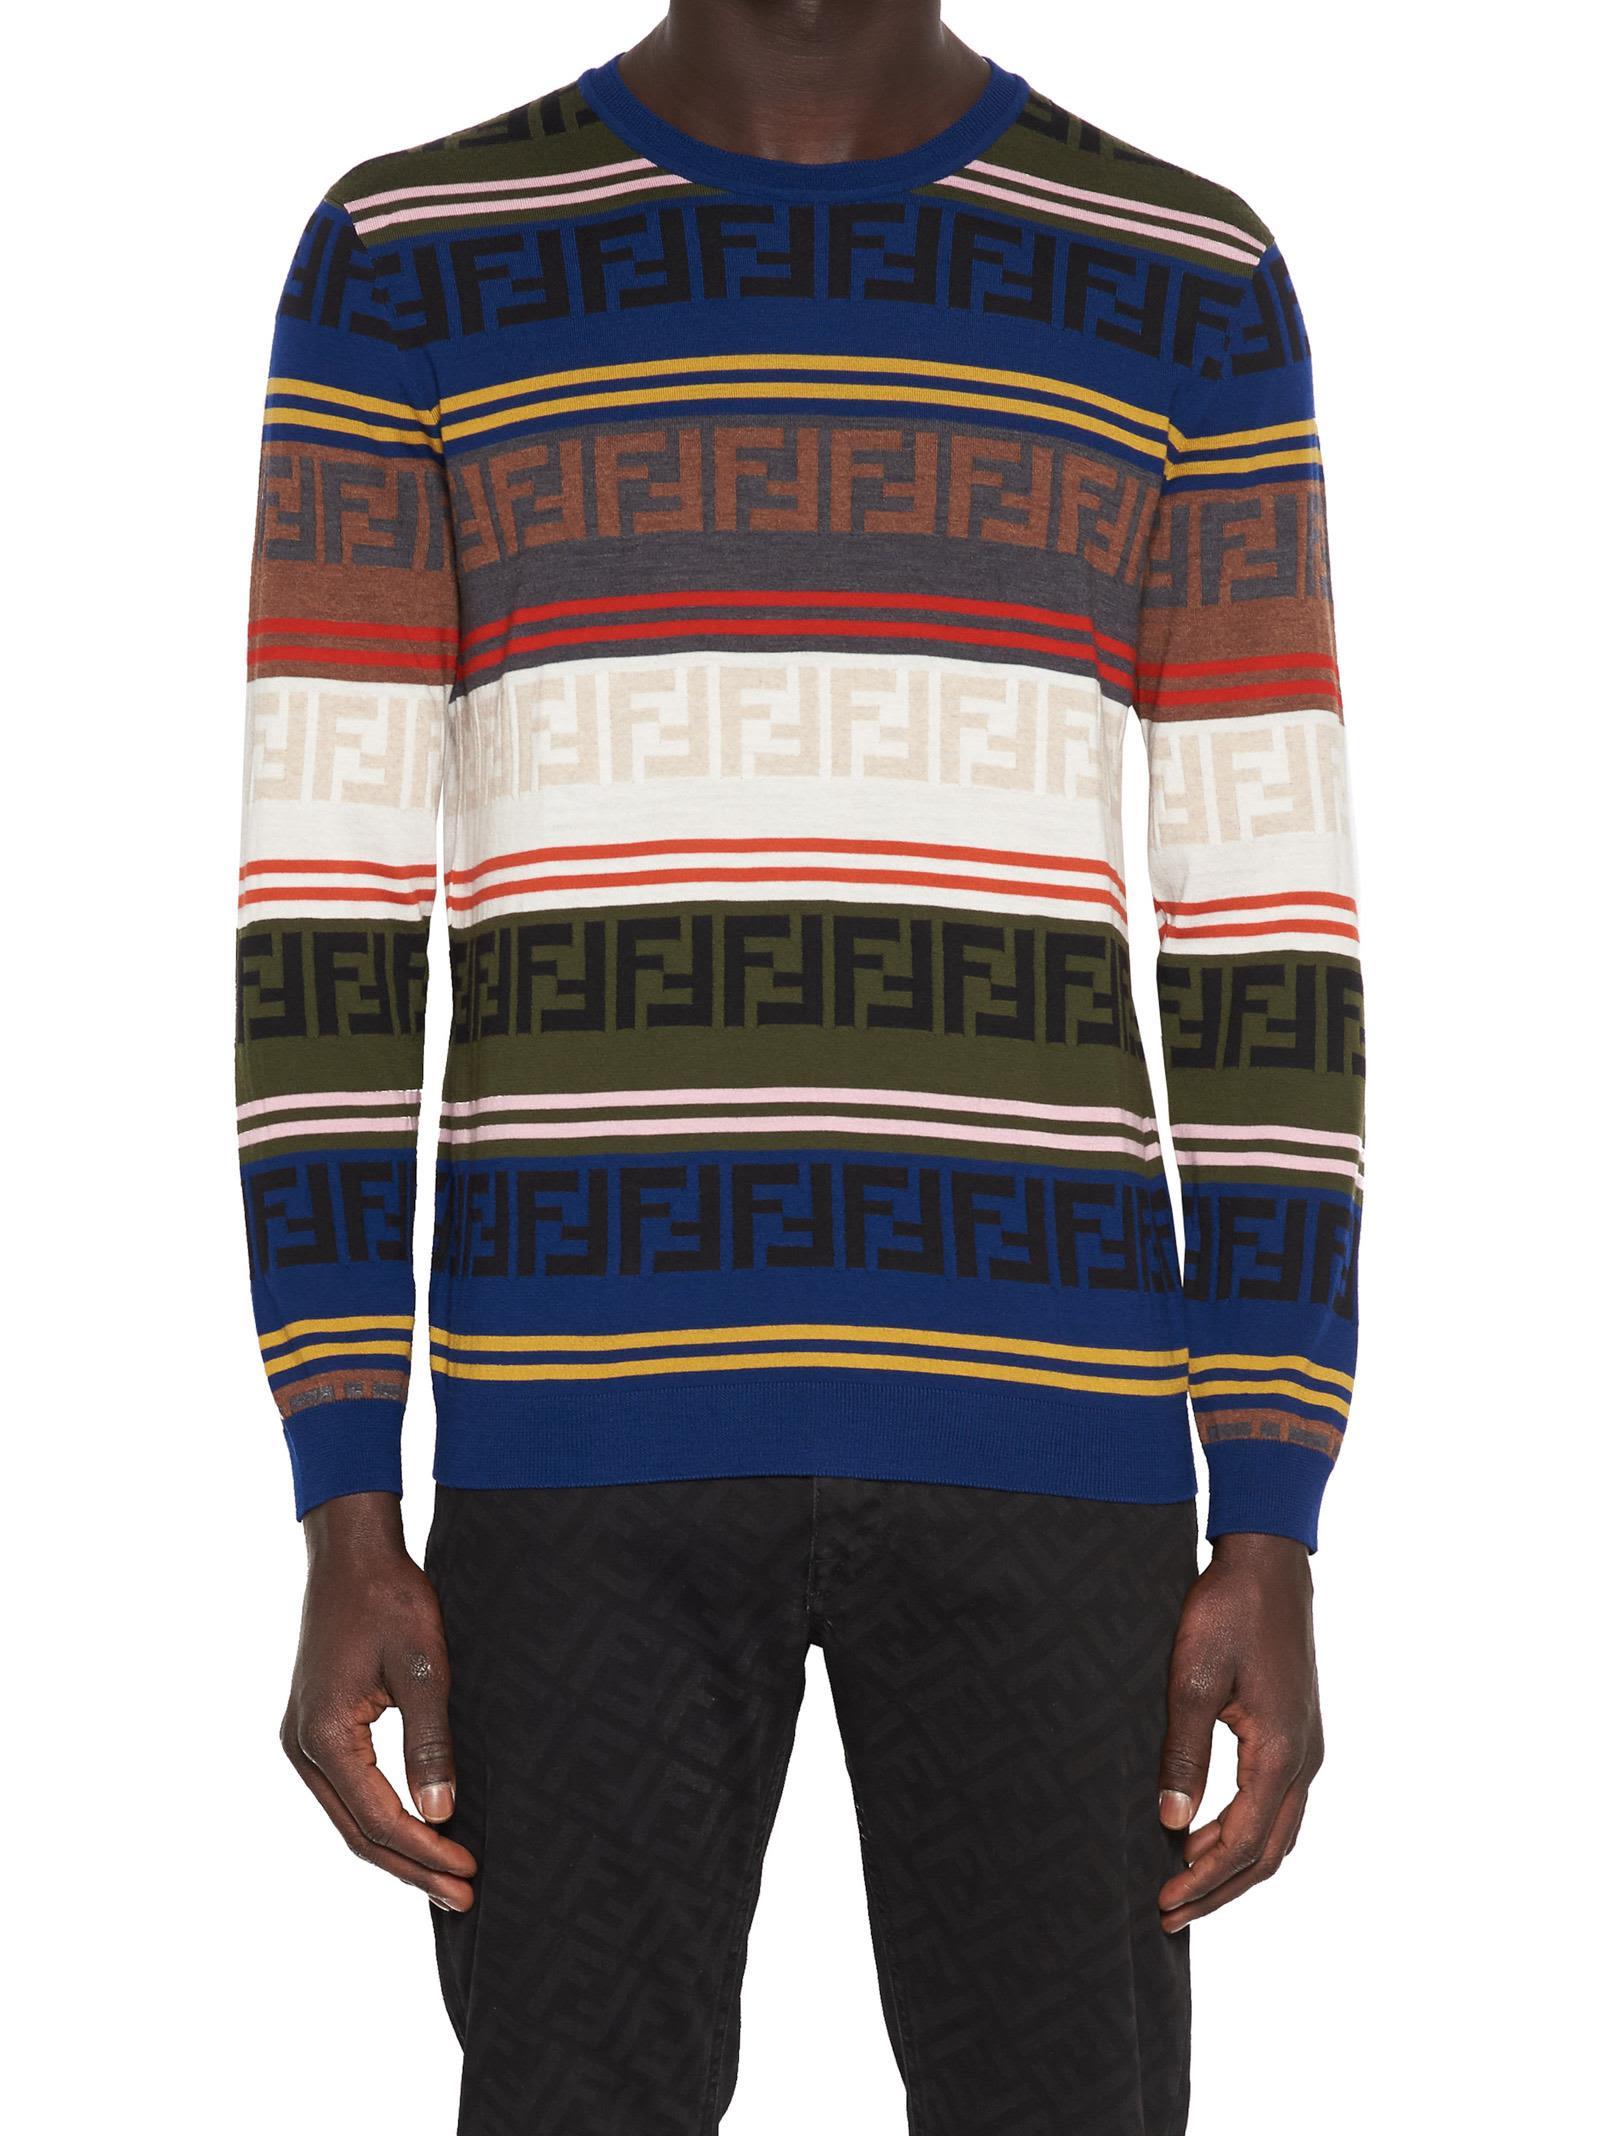 fendi colorful sweater